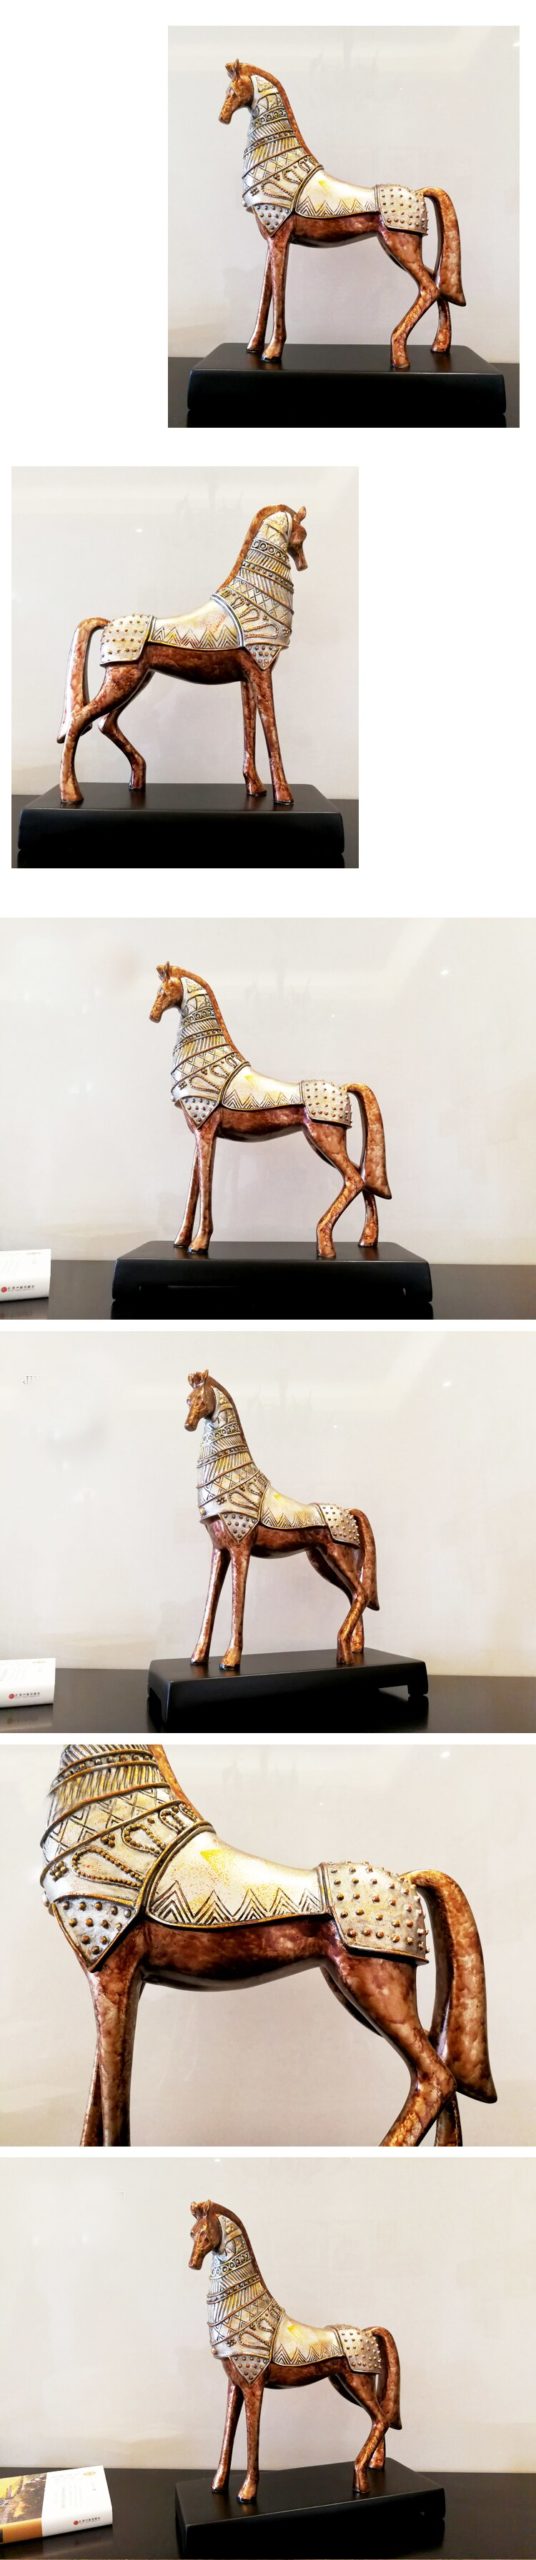 Retro Medieval War Horse Ornaments Resin Armored Horse Desk Decor Black Base European Vintage Home Decoration Accessories